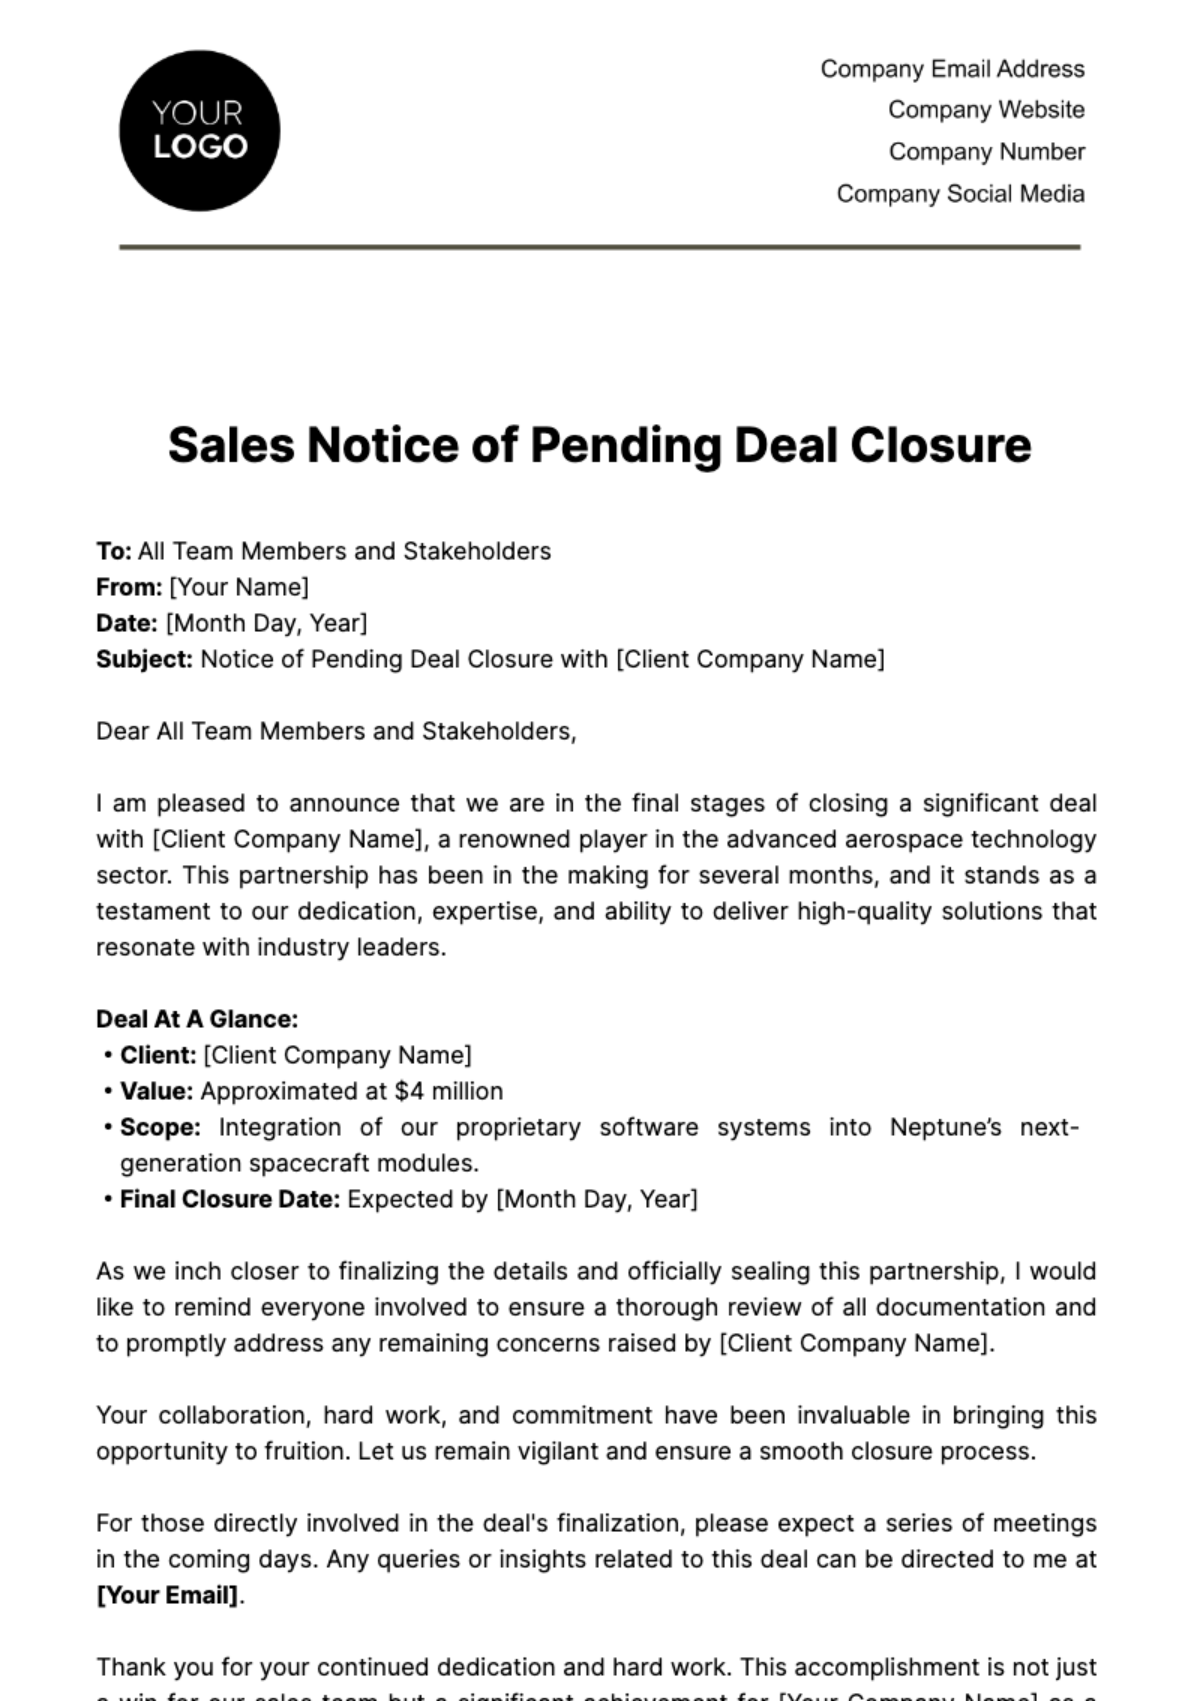 Sales Notice of Pending Deal Closure Template